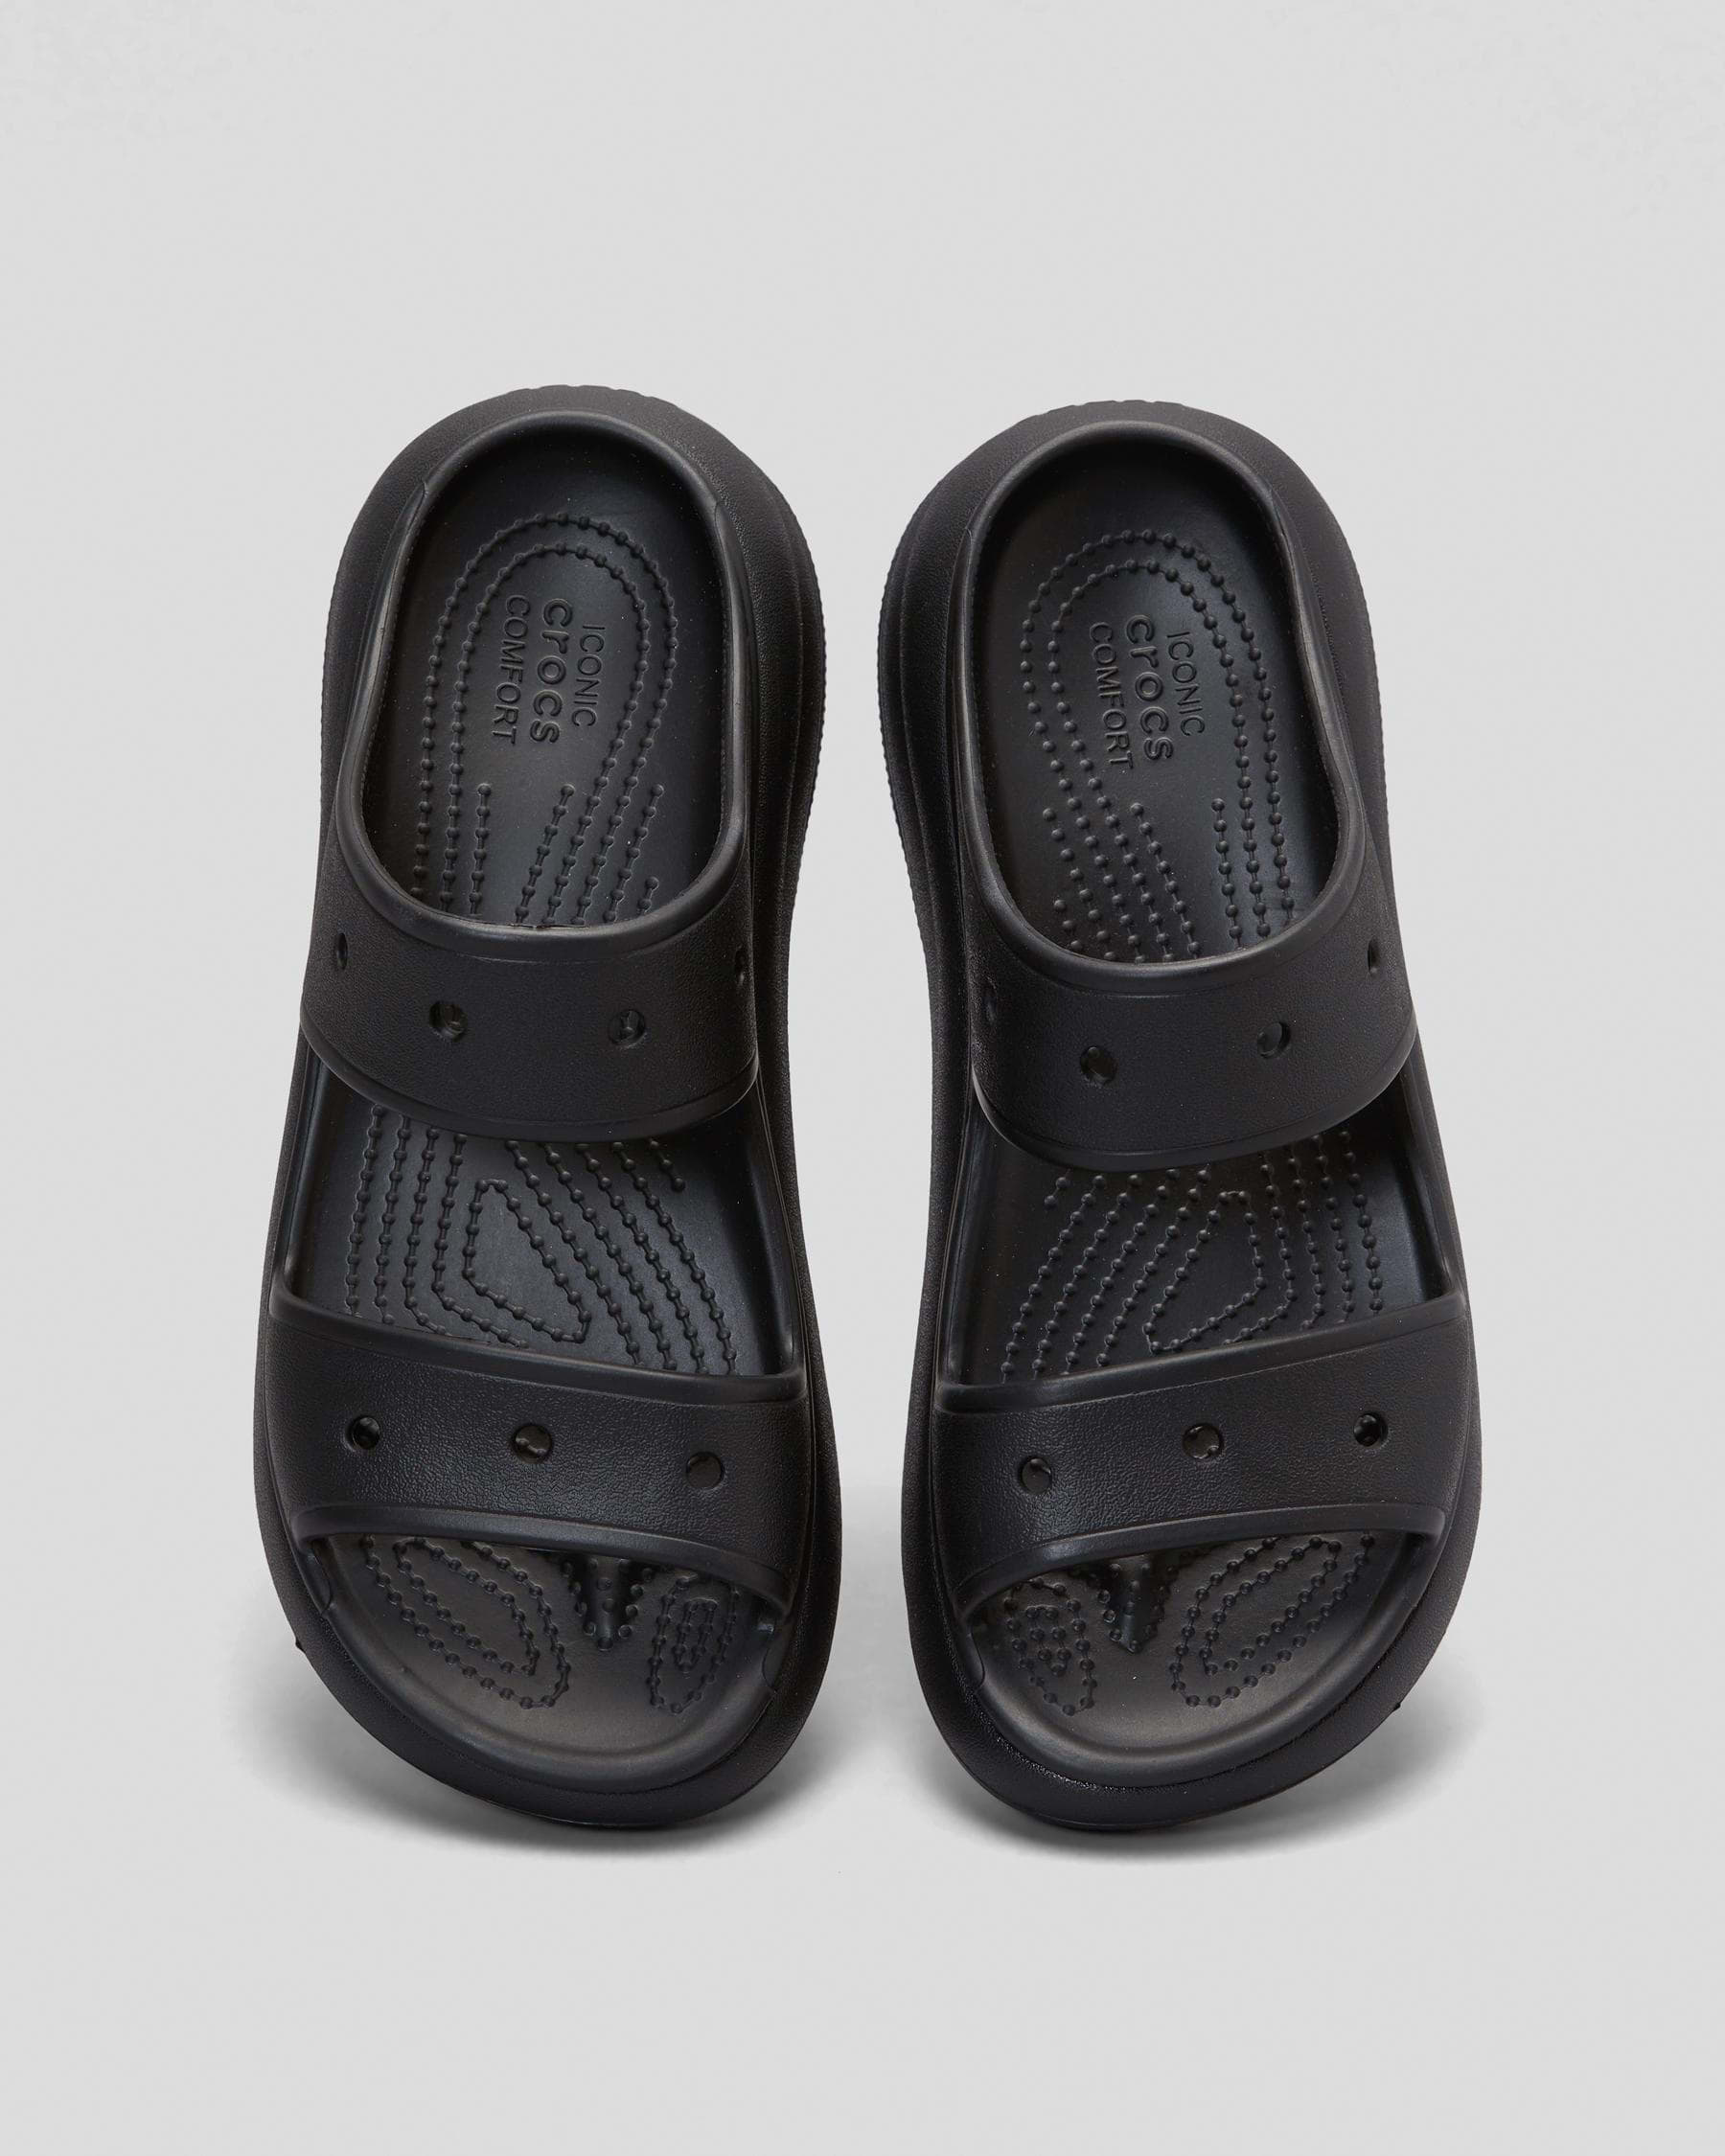 Crocs Crush Sandals In Black - Fast Shipping & Easy Returns - City ...